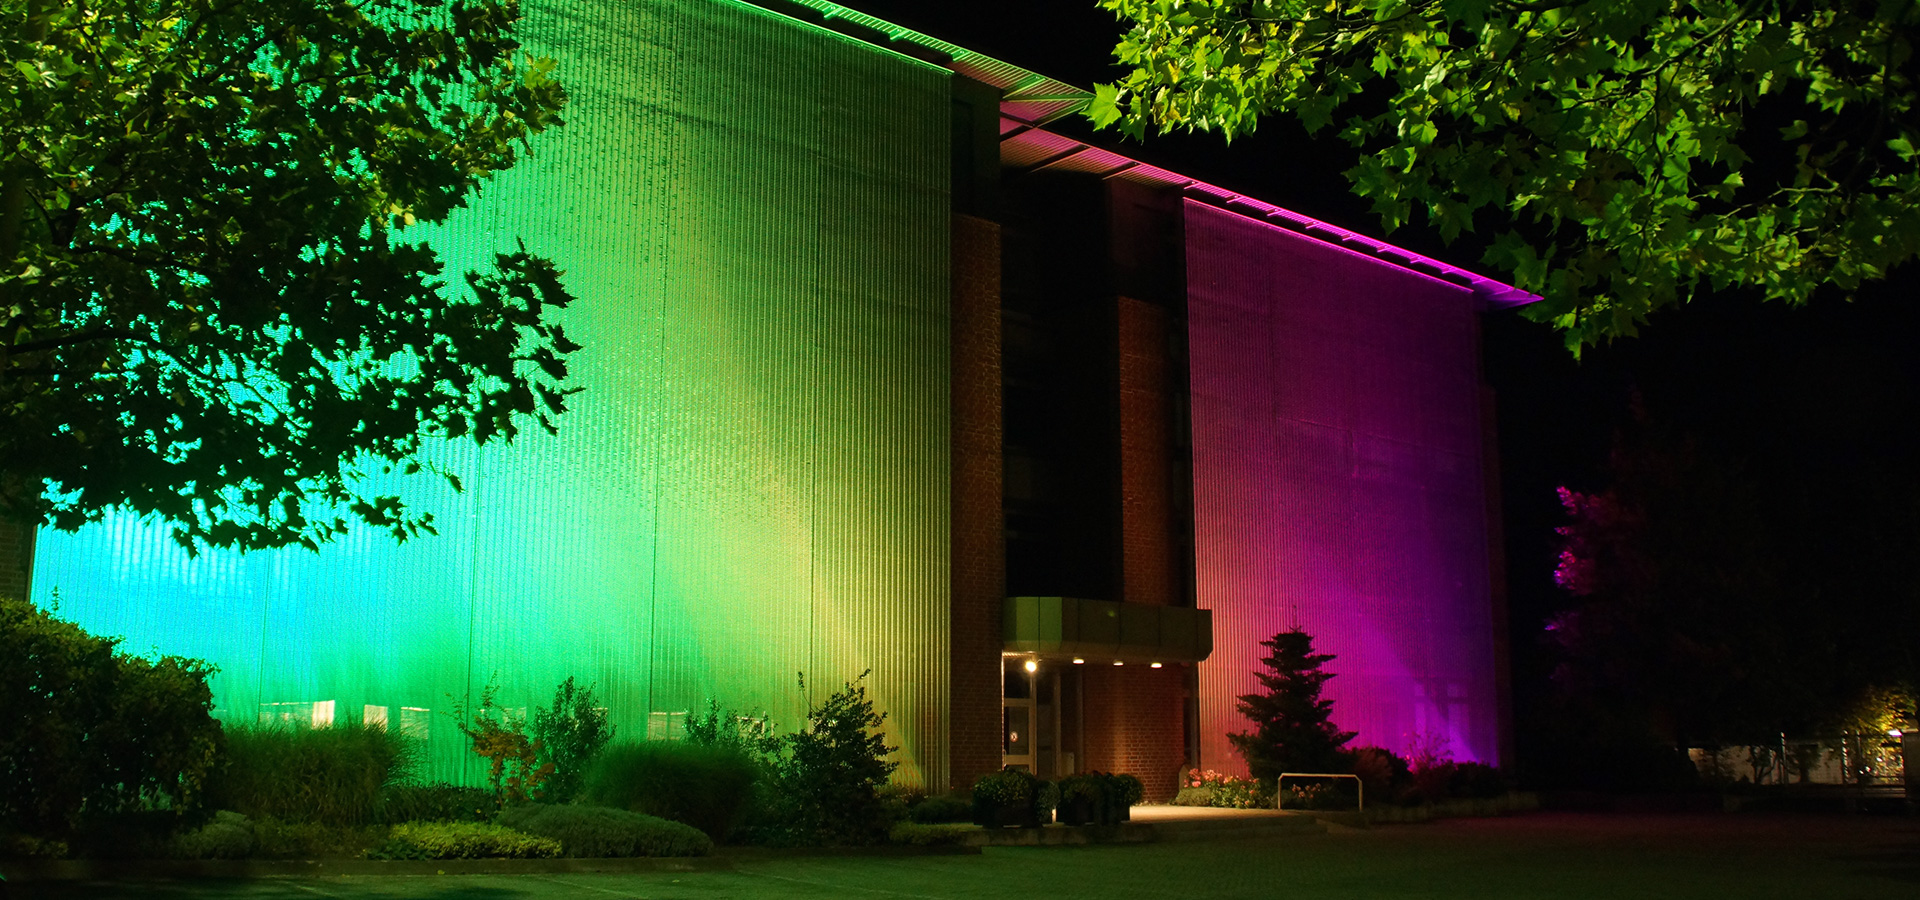 Coloured illumination of a wire mesh facade